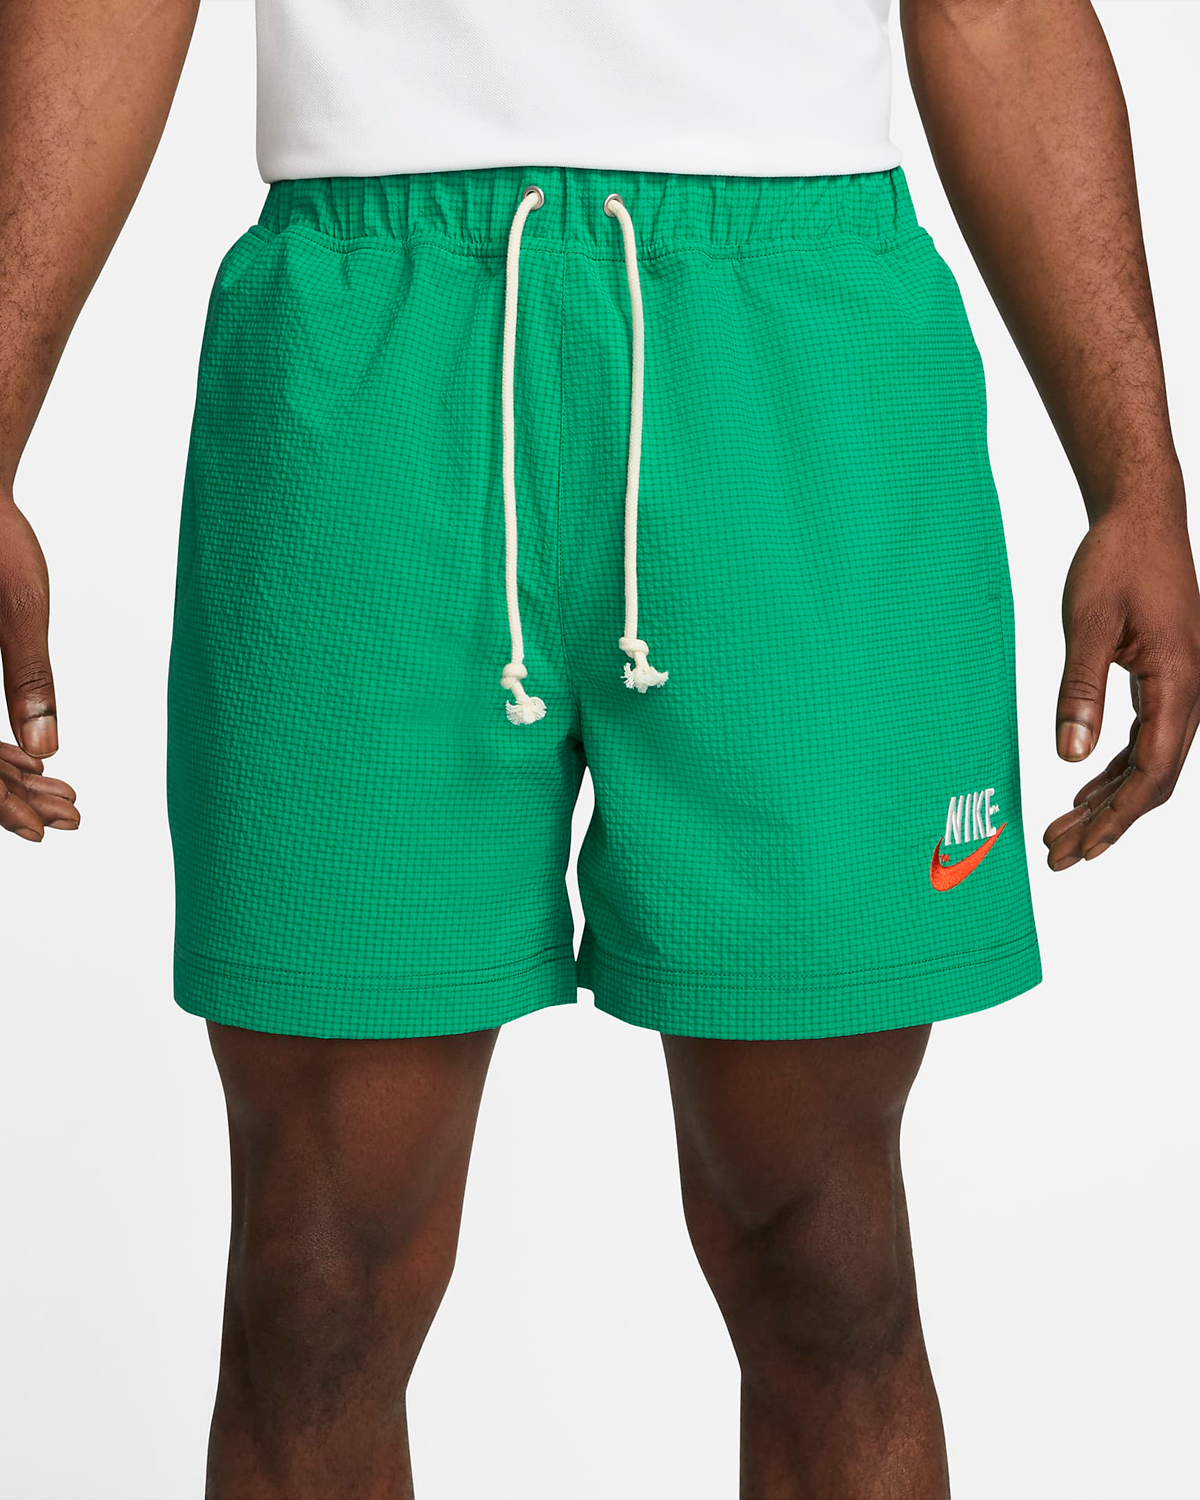 Nike-Malachite-Green-Shorts